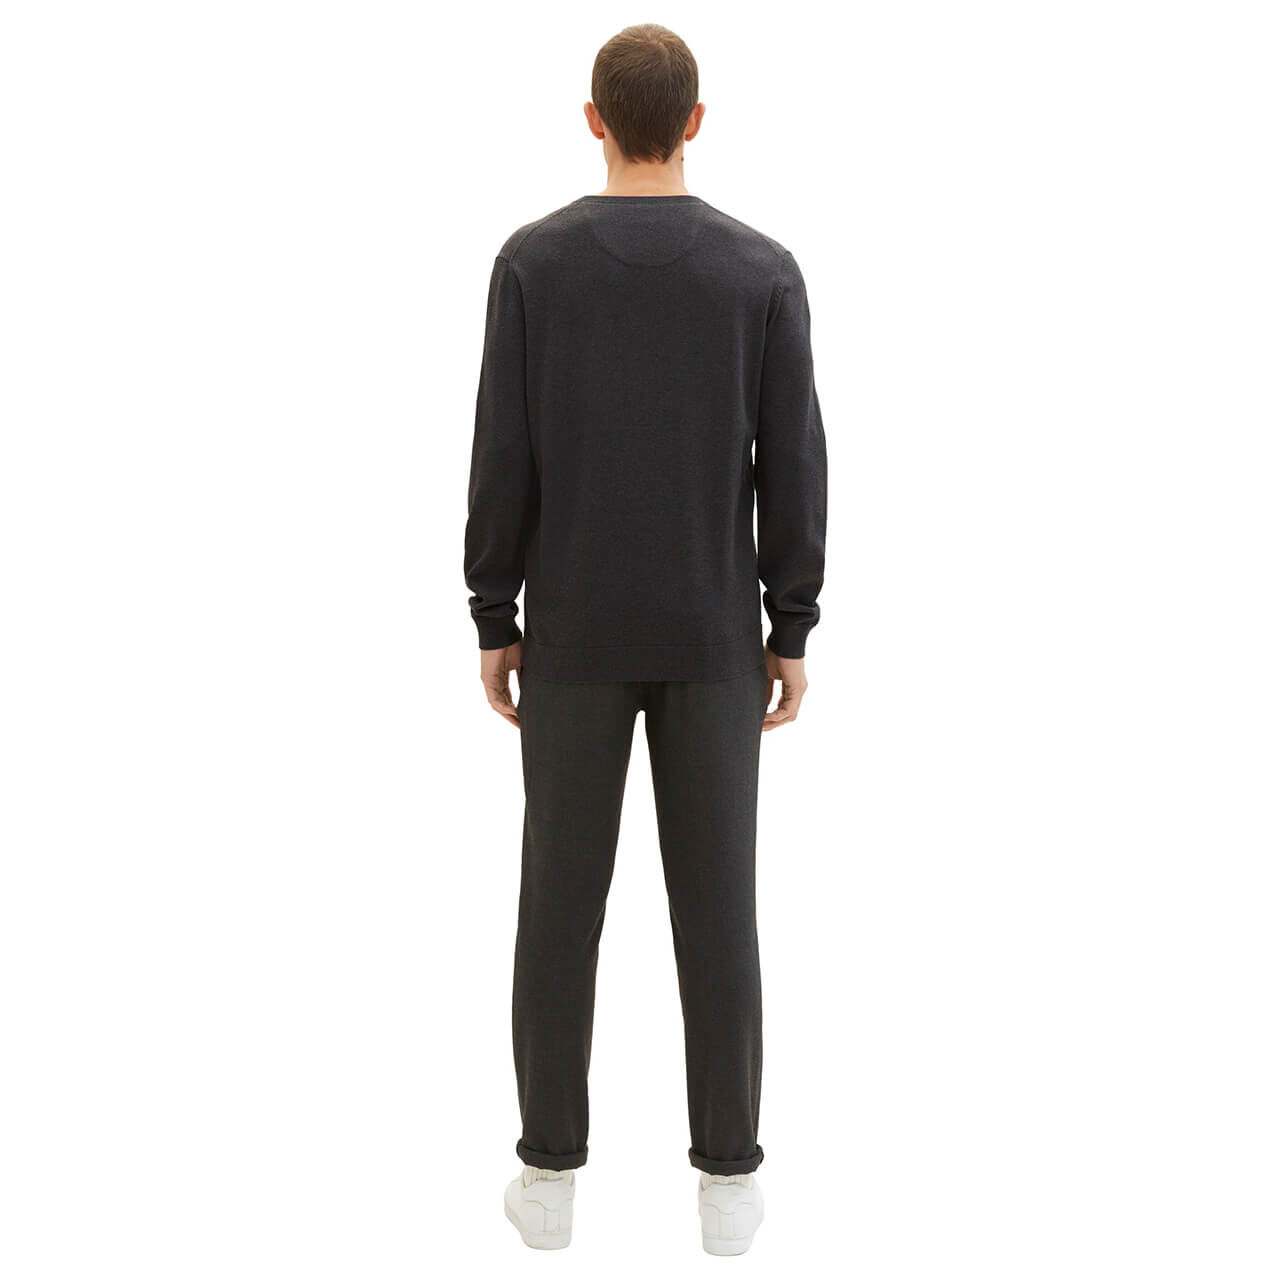 Tom Tailor Herren Pullover Basic V-neck black grey melange compact cotton